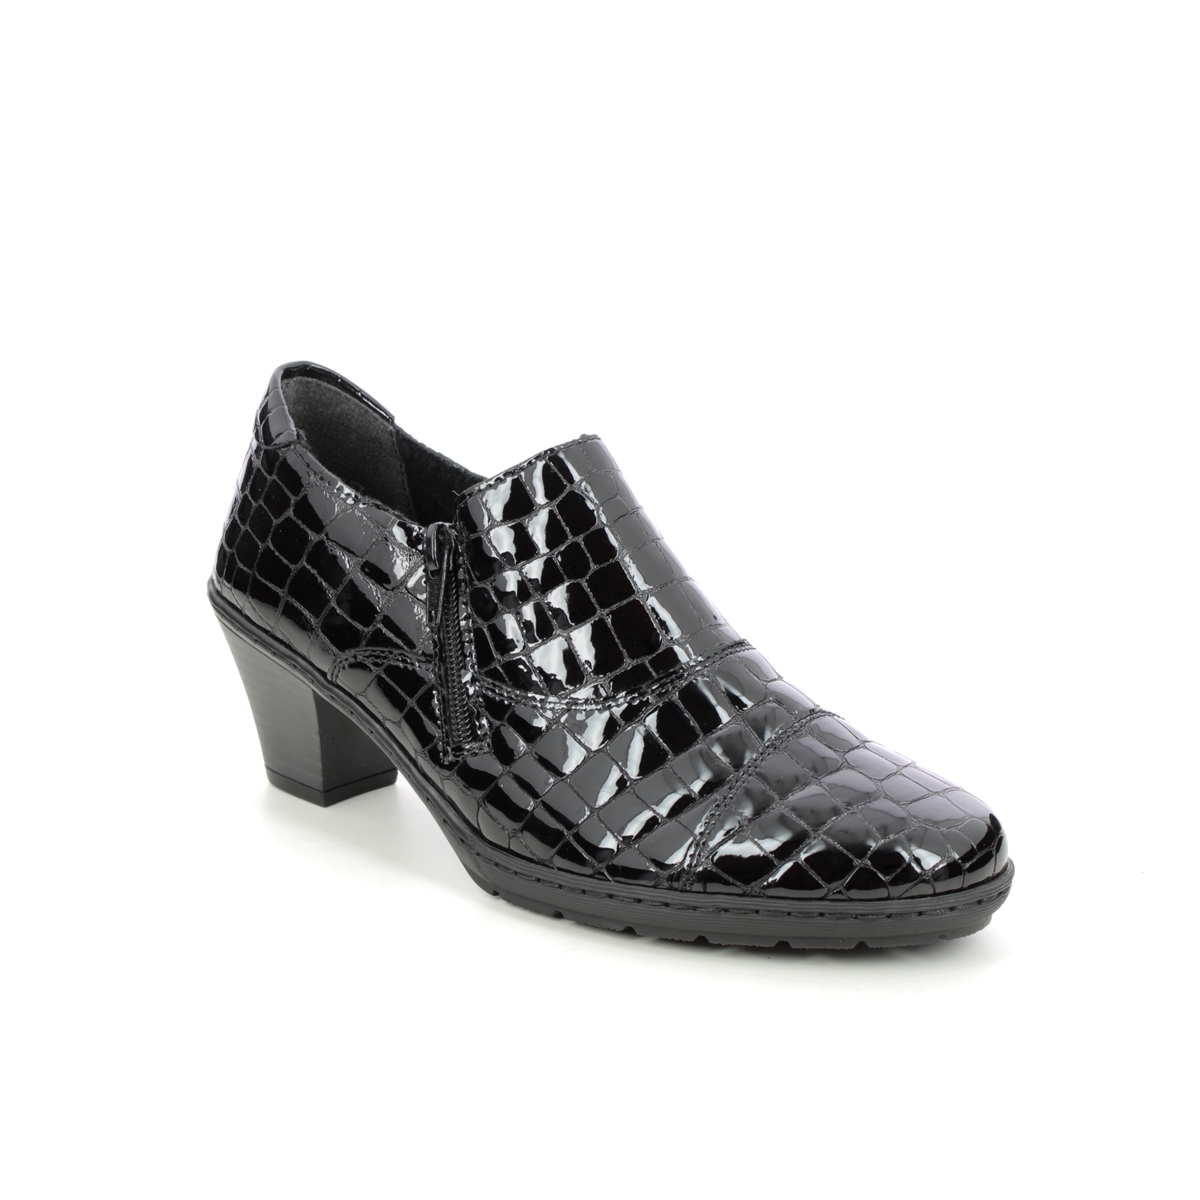 Rieker Addicap Black Croc Womens Shoe-Boots 57173-03 In Size 39 In Plain Black Croc Effect